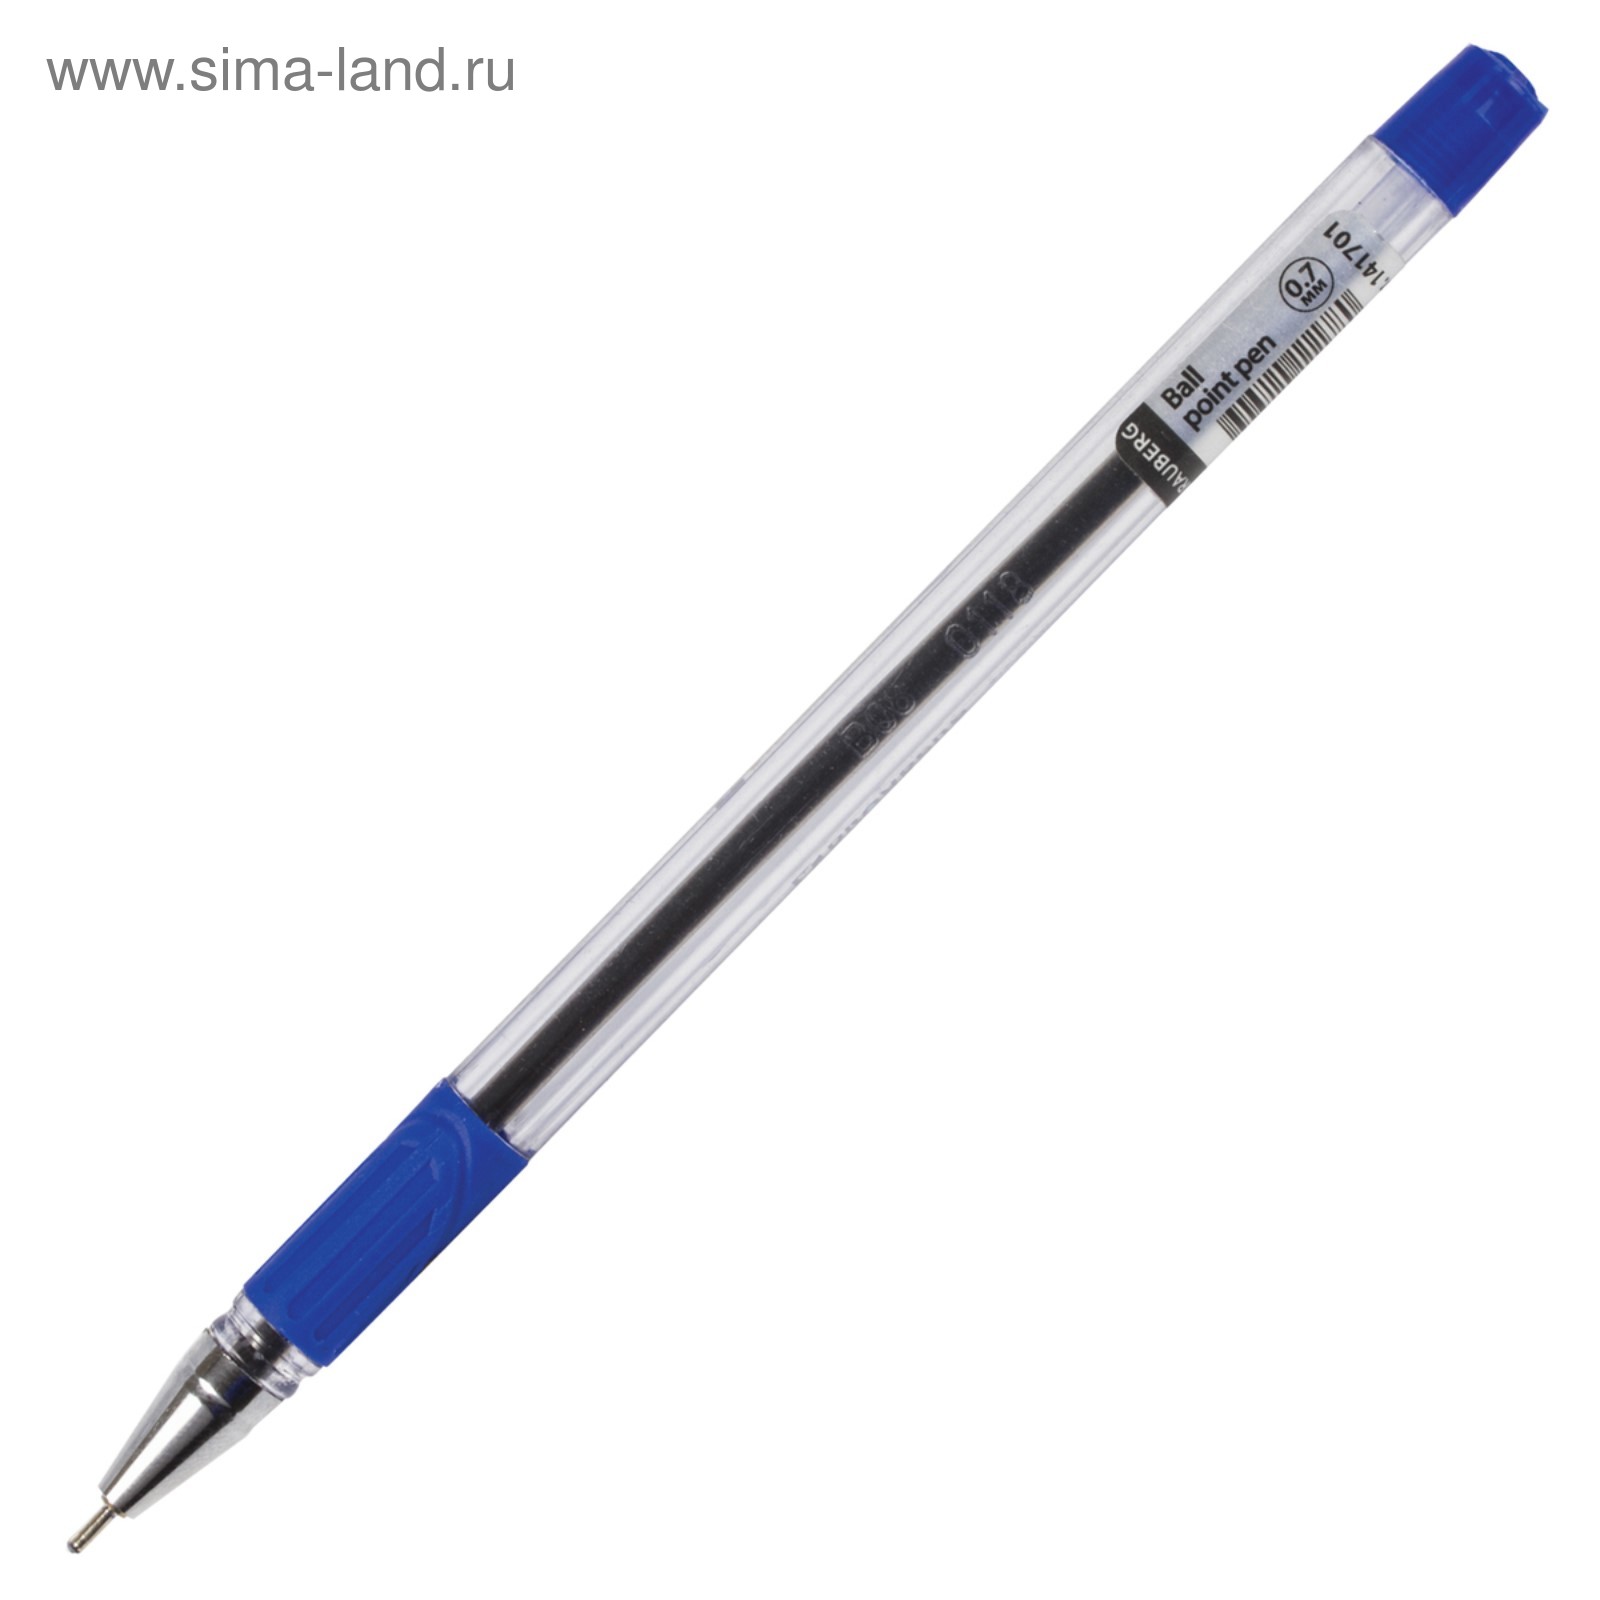 Brauberg 0.7. Ручка БРАУБЕРГ 0.7. Ручка БРАУБЕРГ 0.7 мм синяя. Ручка шариковая БРАУБЕРГ 0.7. Ручка БРАУБЕРГ 0.7 масляная синяя.